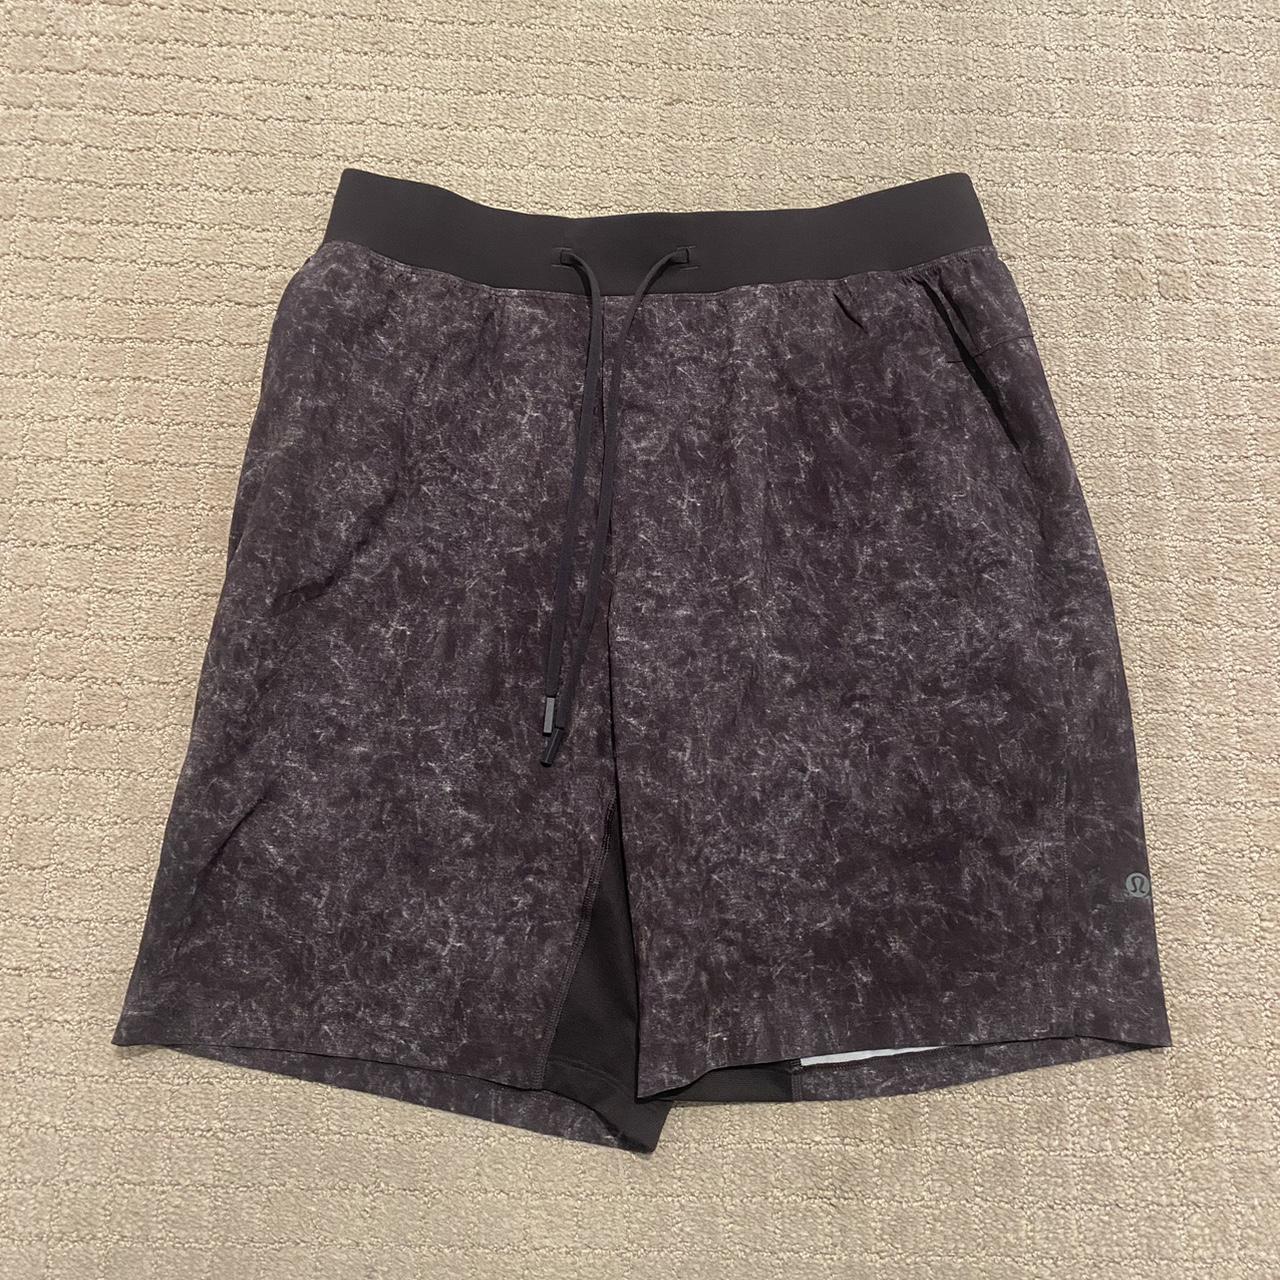 Lululemon athletic shorts 7” inseam - Depop